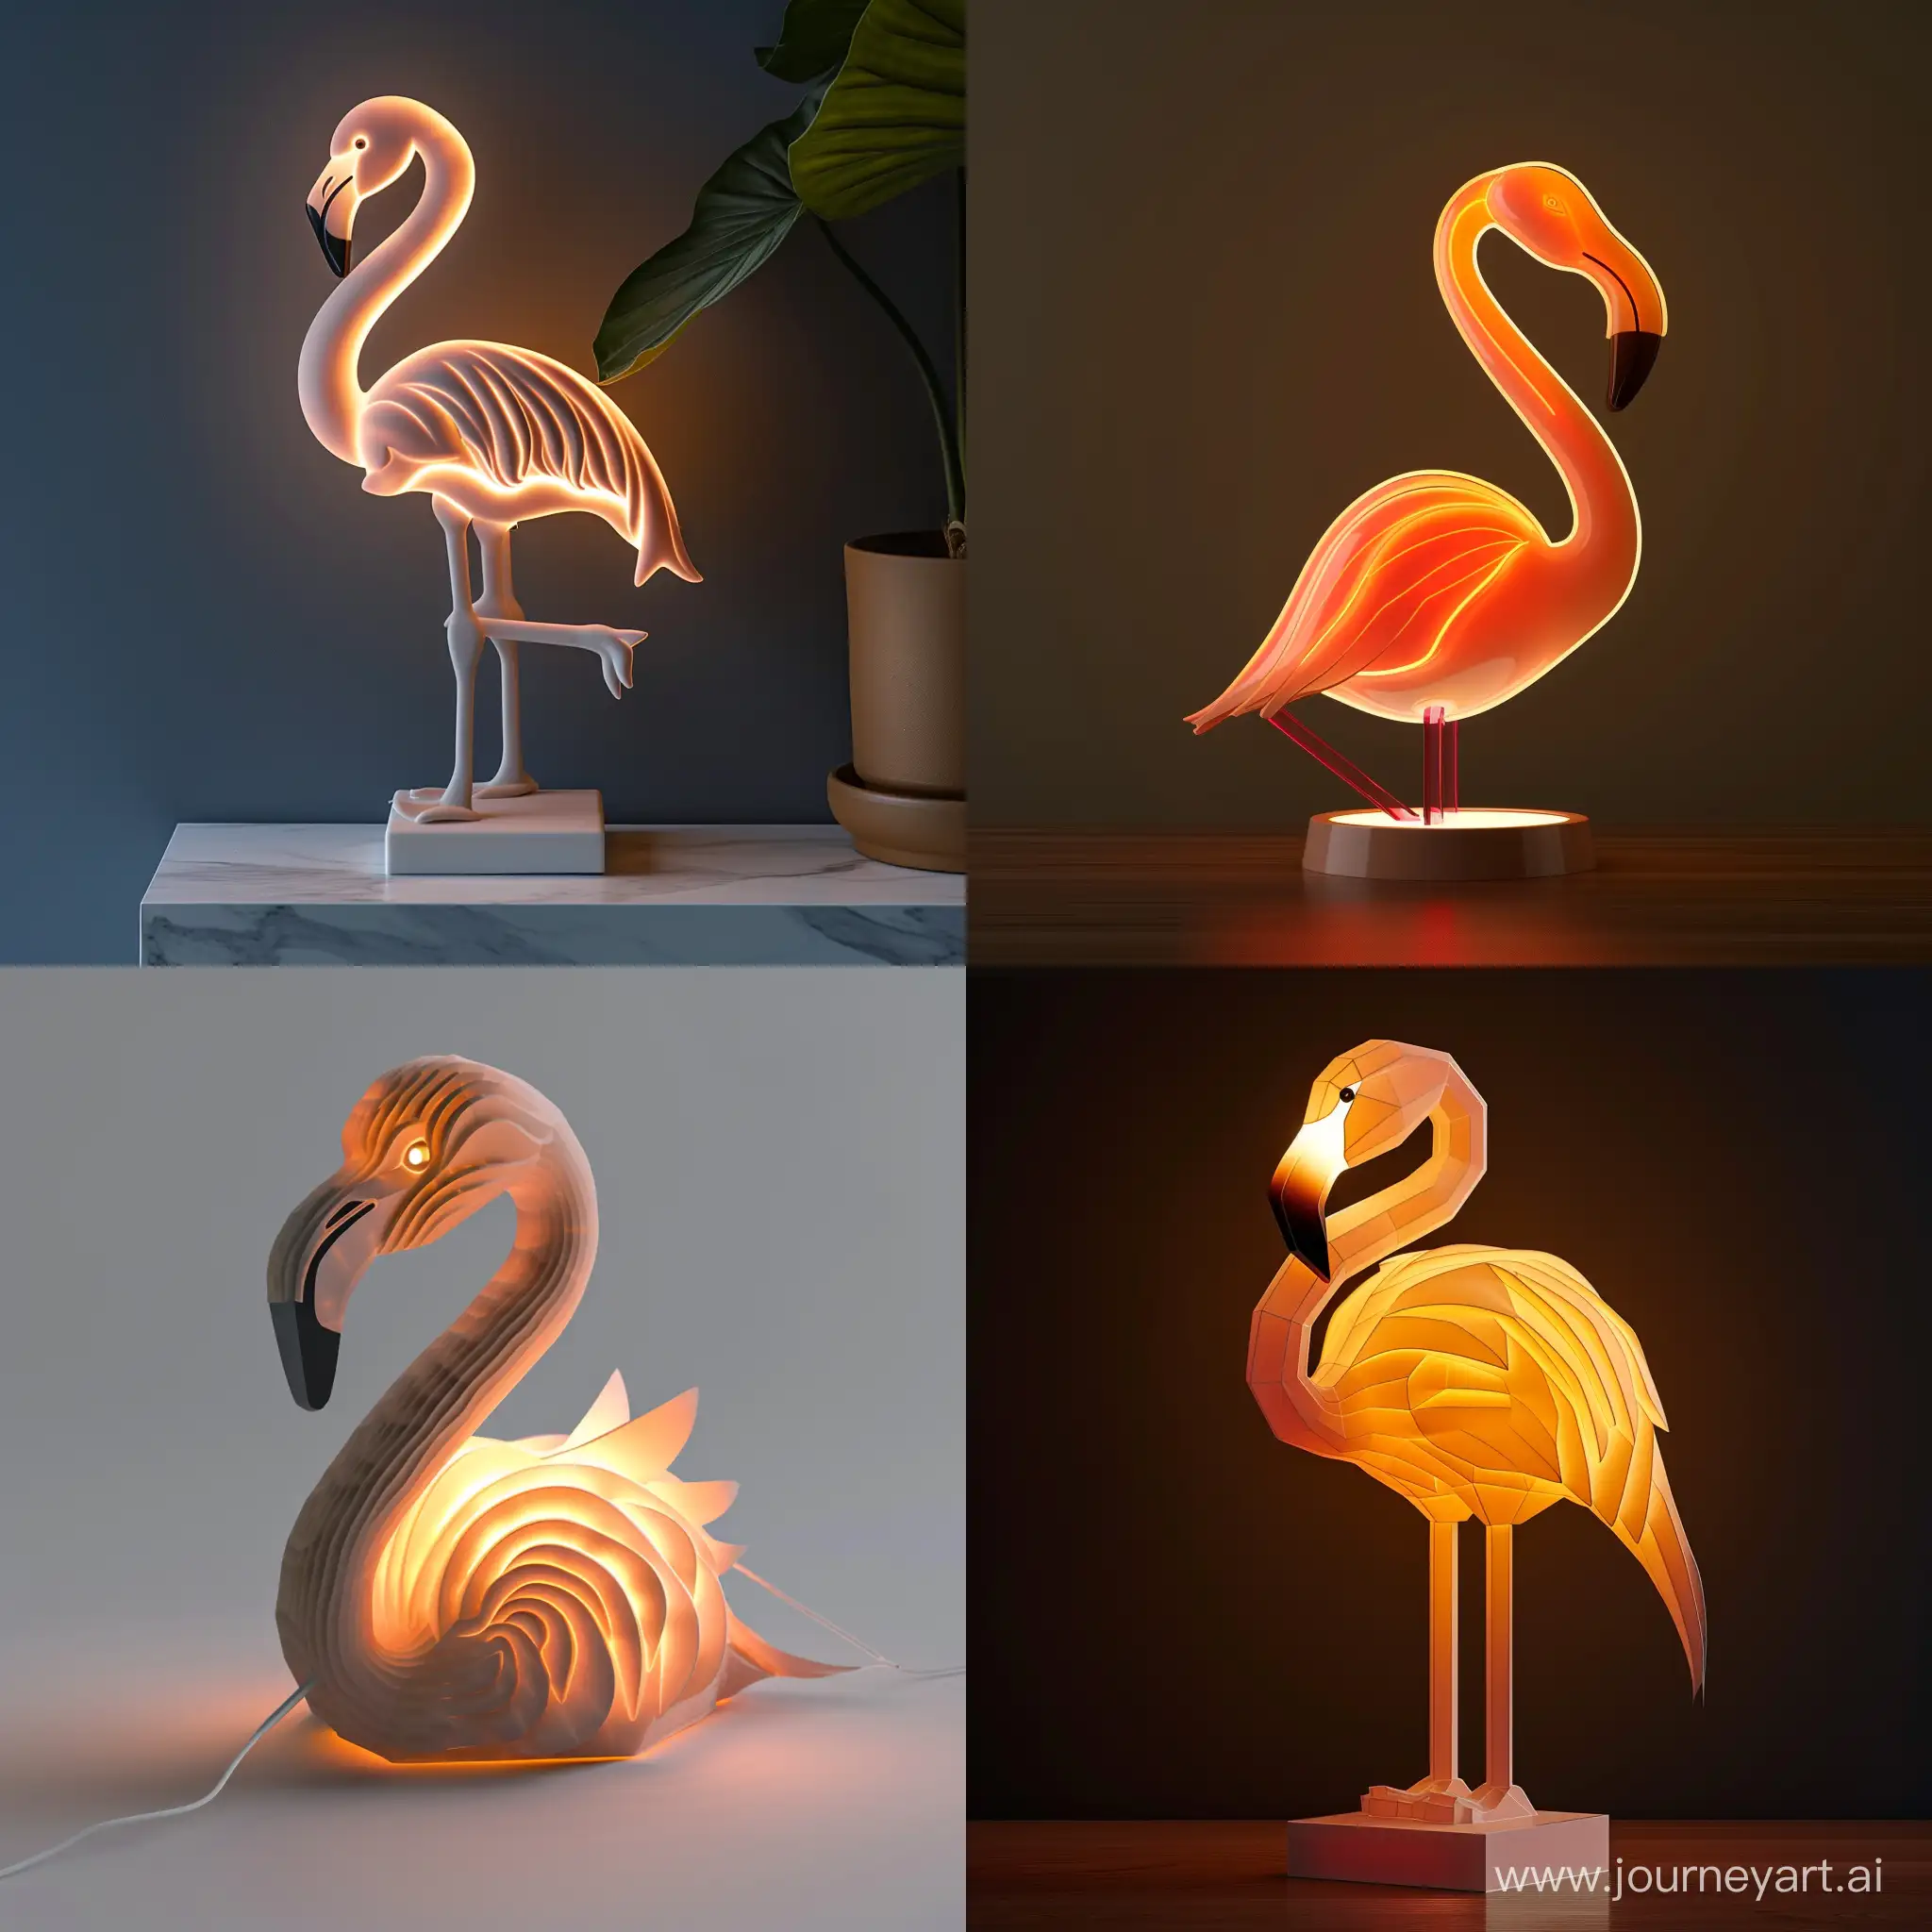 Design of a flamingo lighting unit